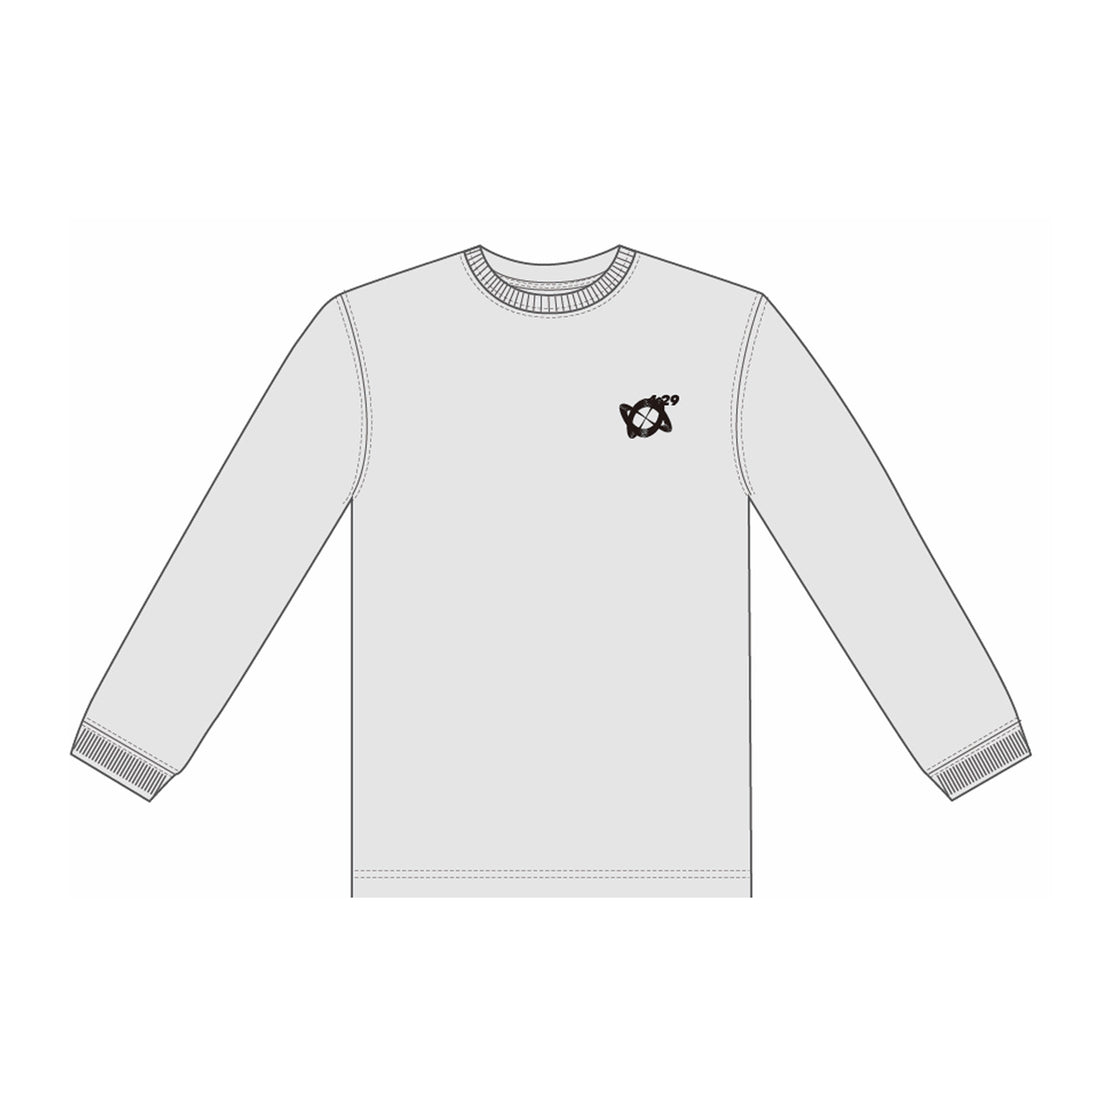 Iori Matsunaga ×HBMR 「永遠の場所」collab long sleeve T-shirt